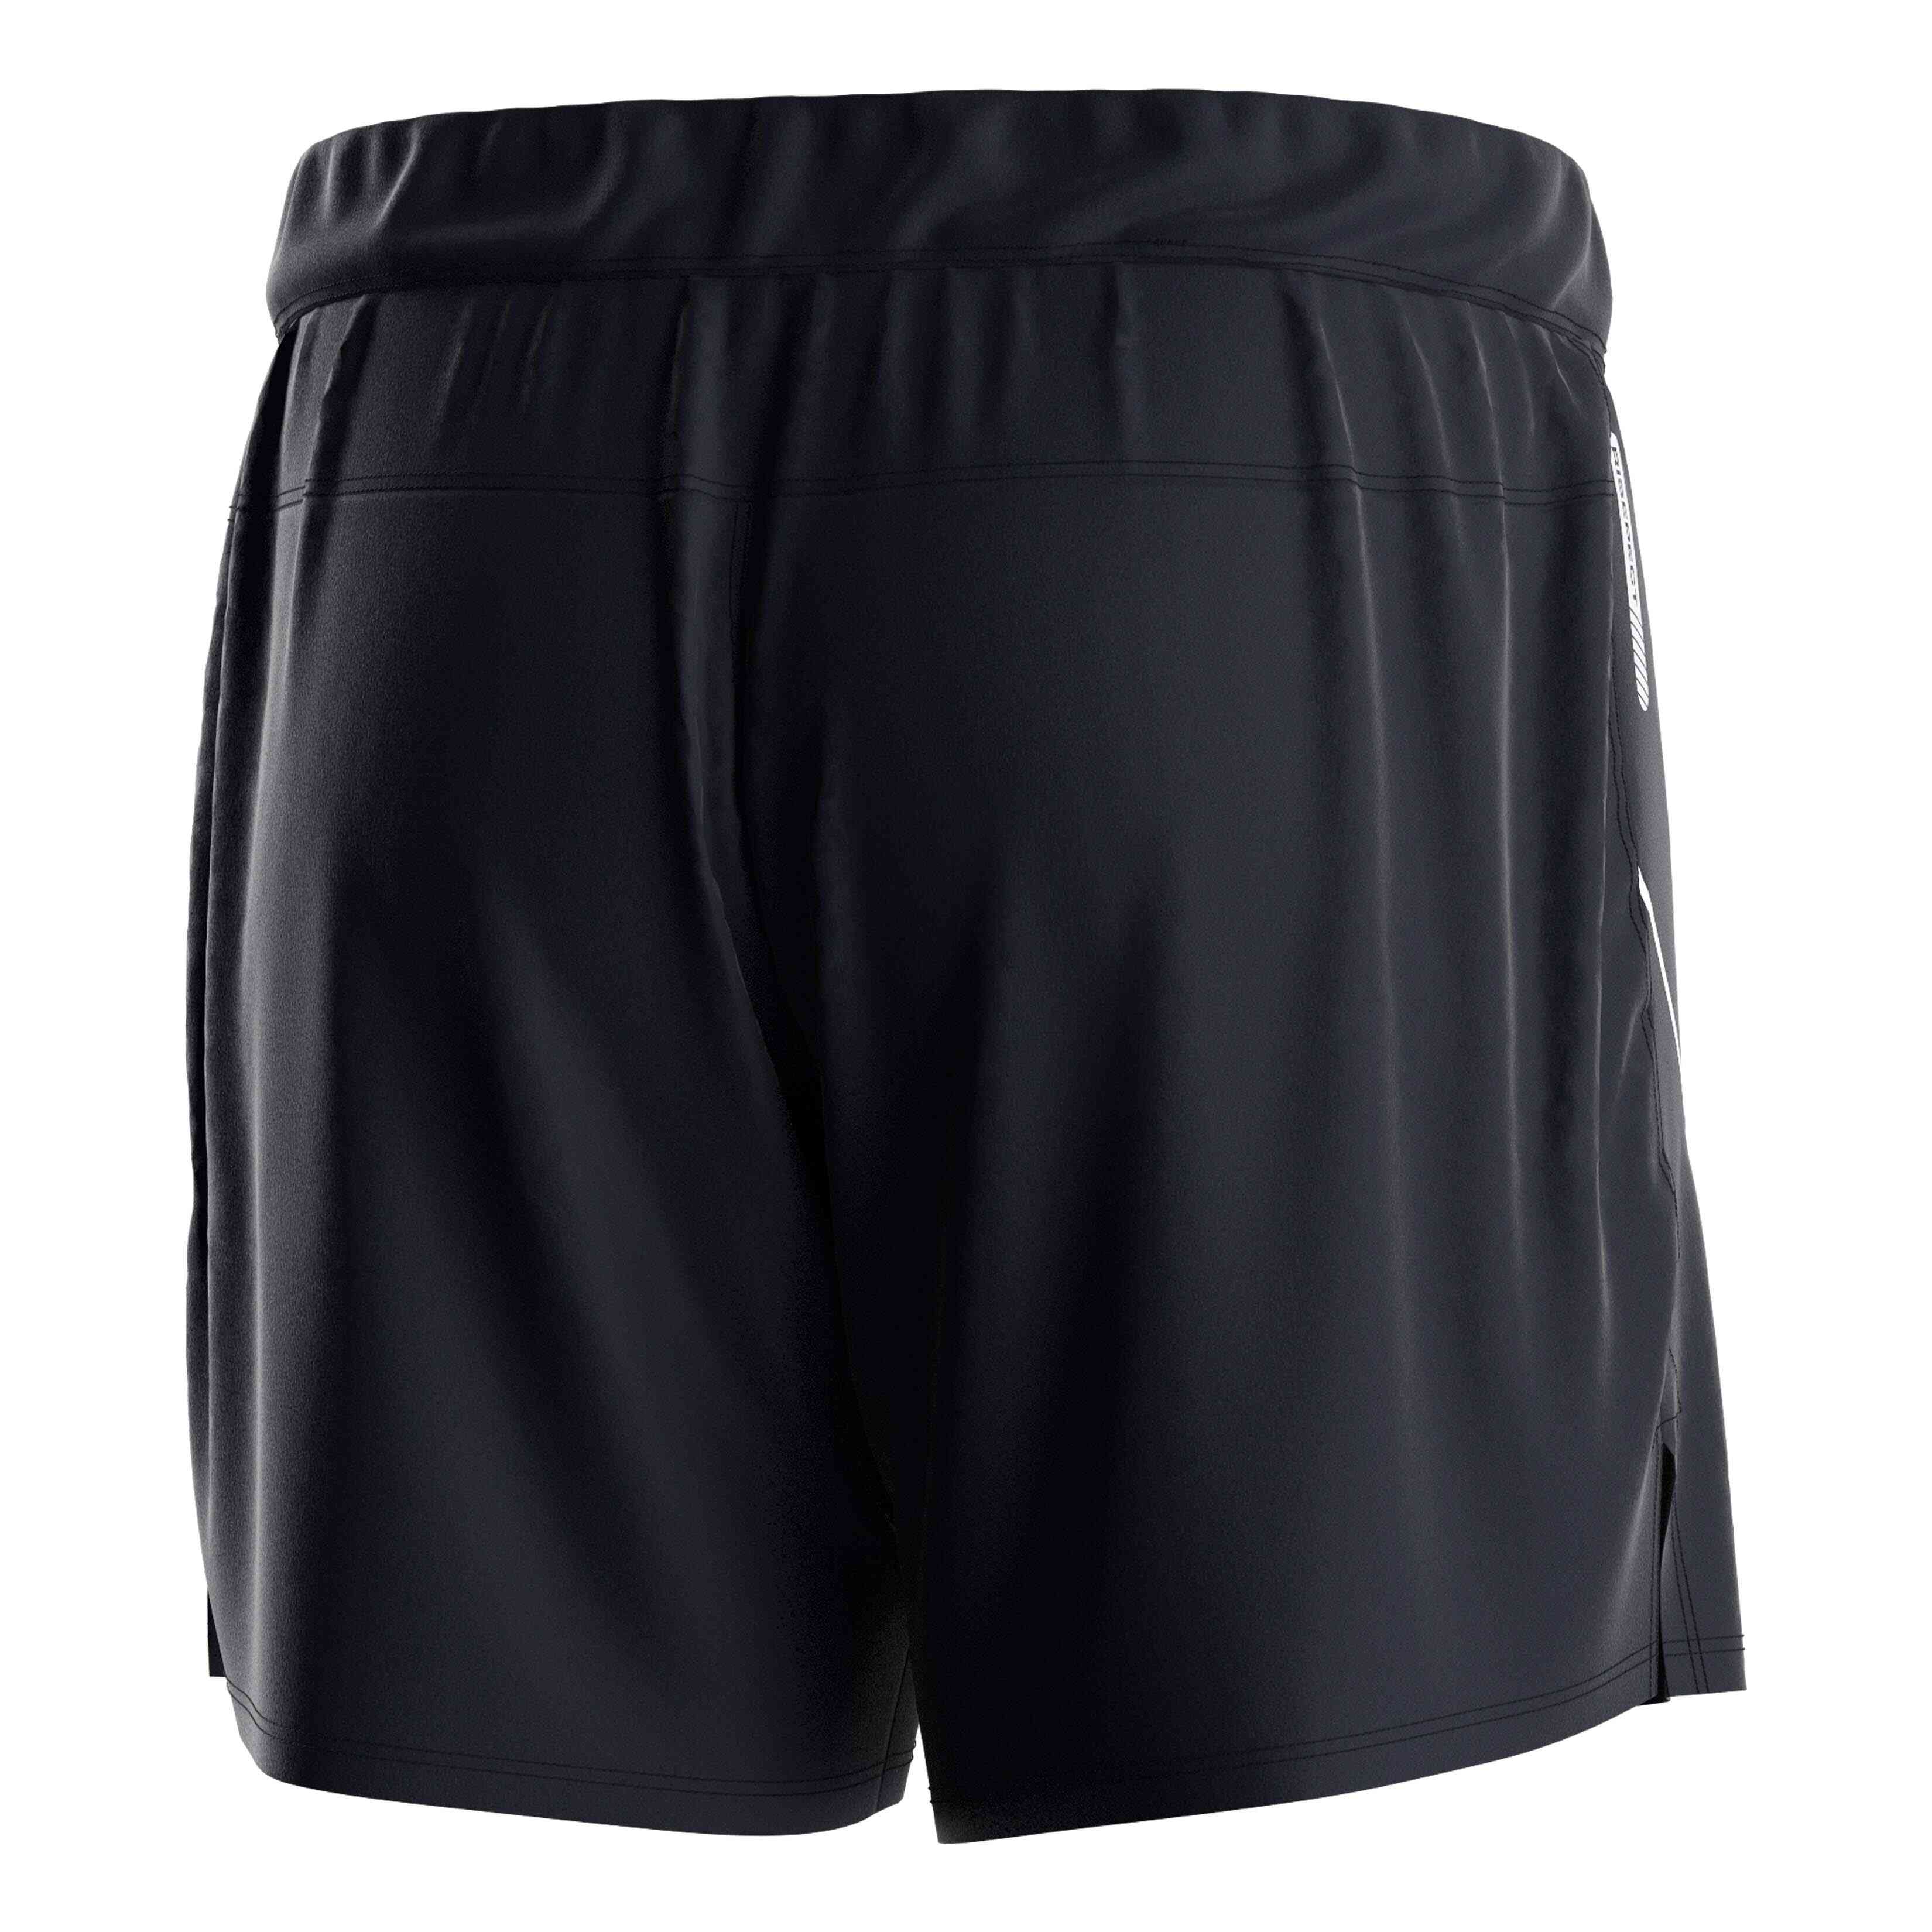 
                Rise tennis ball shorts custom black tennis shorts classic